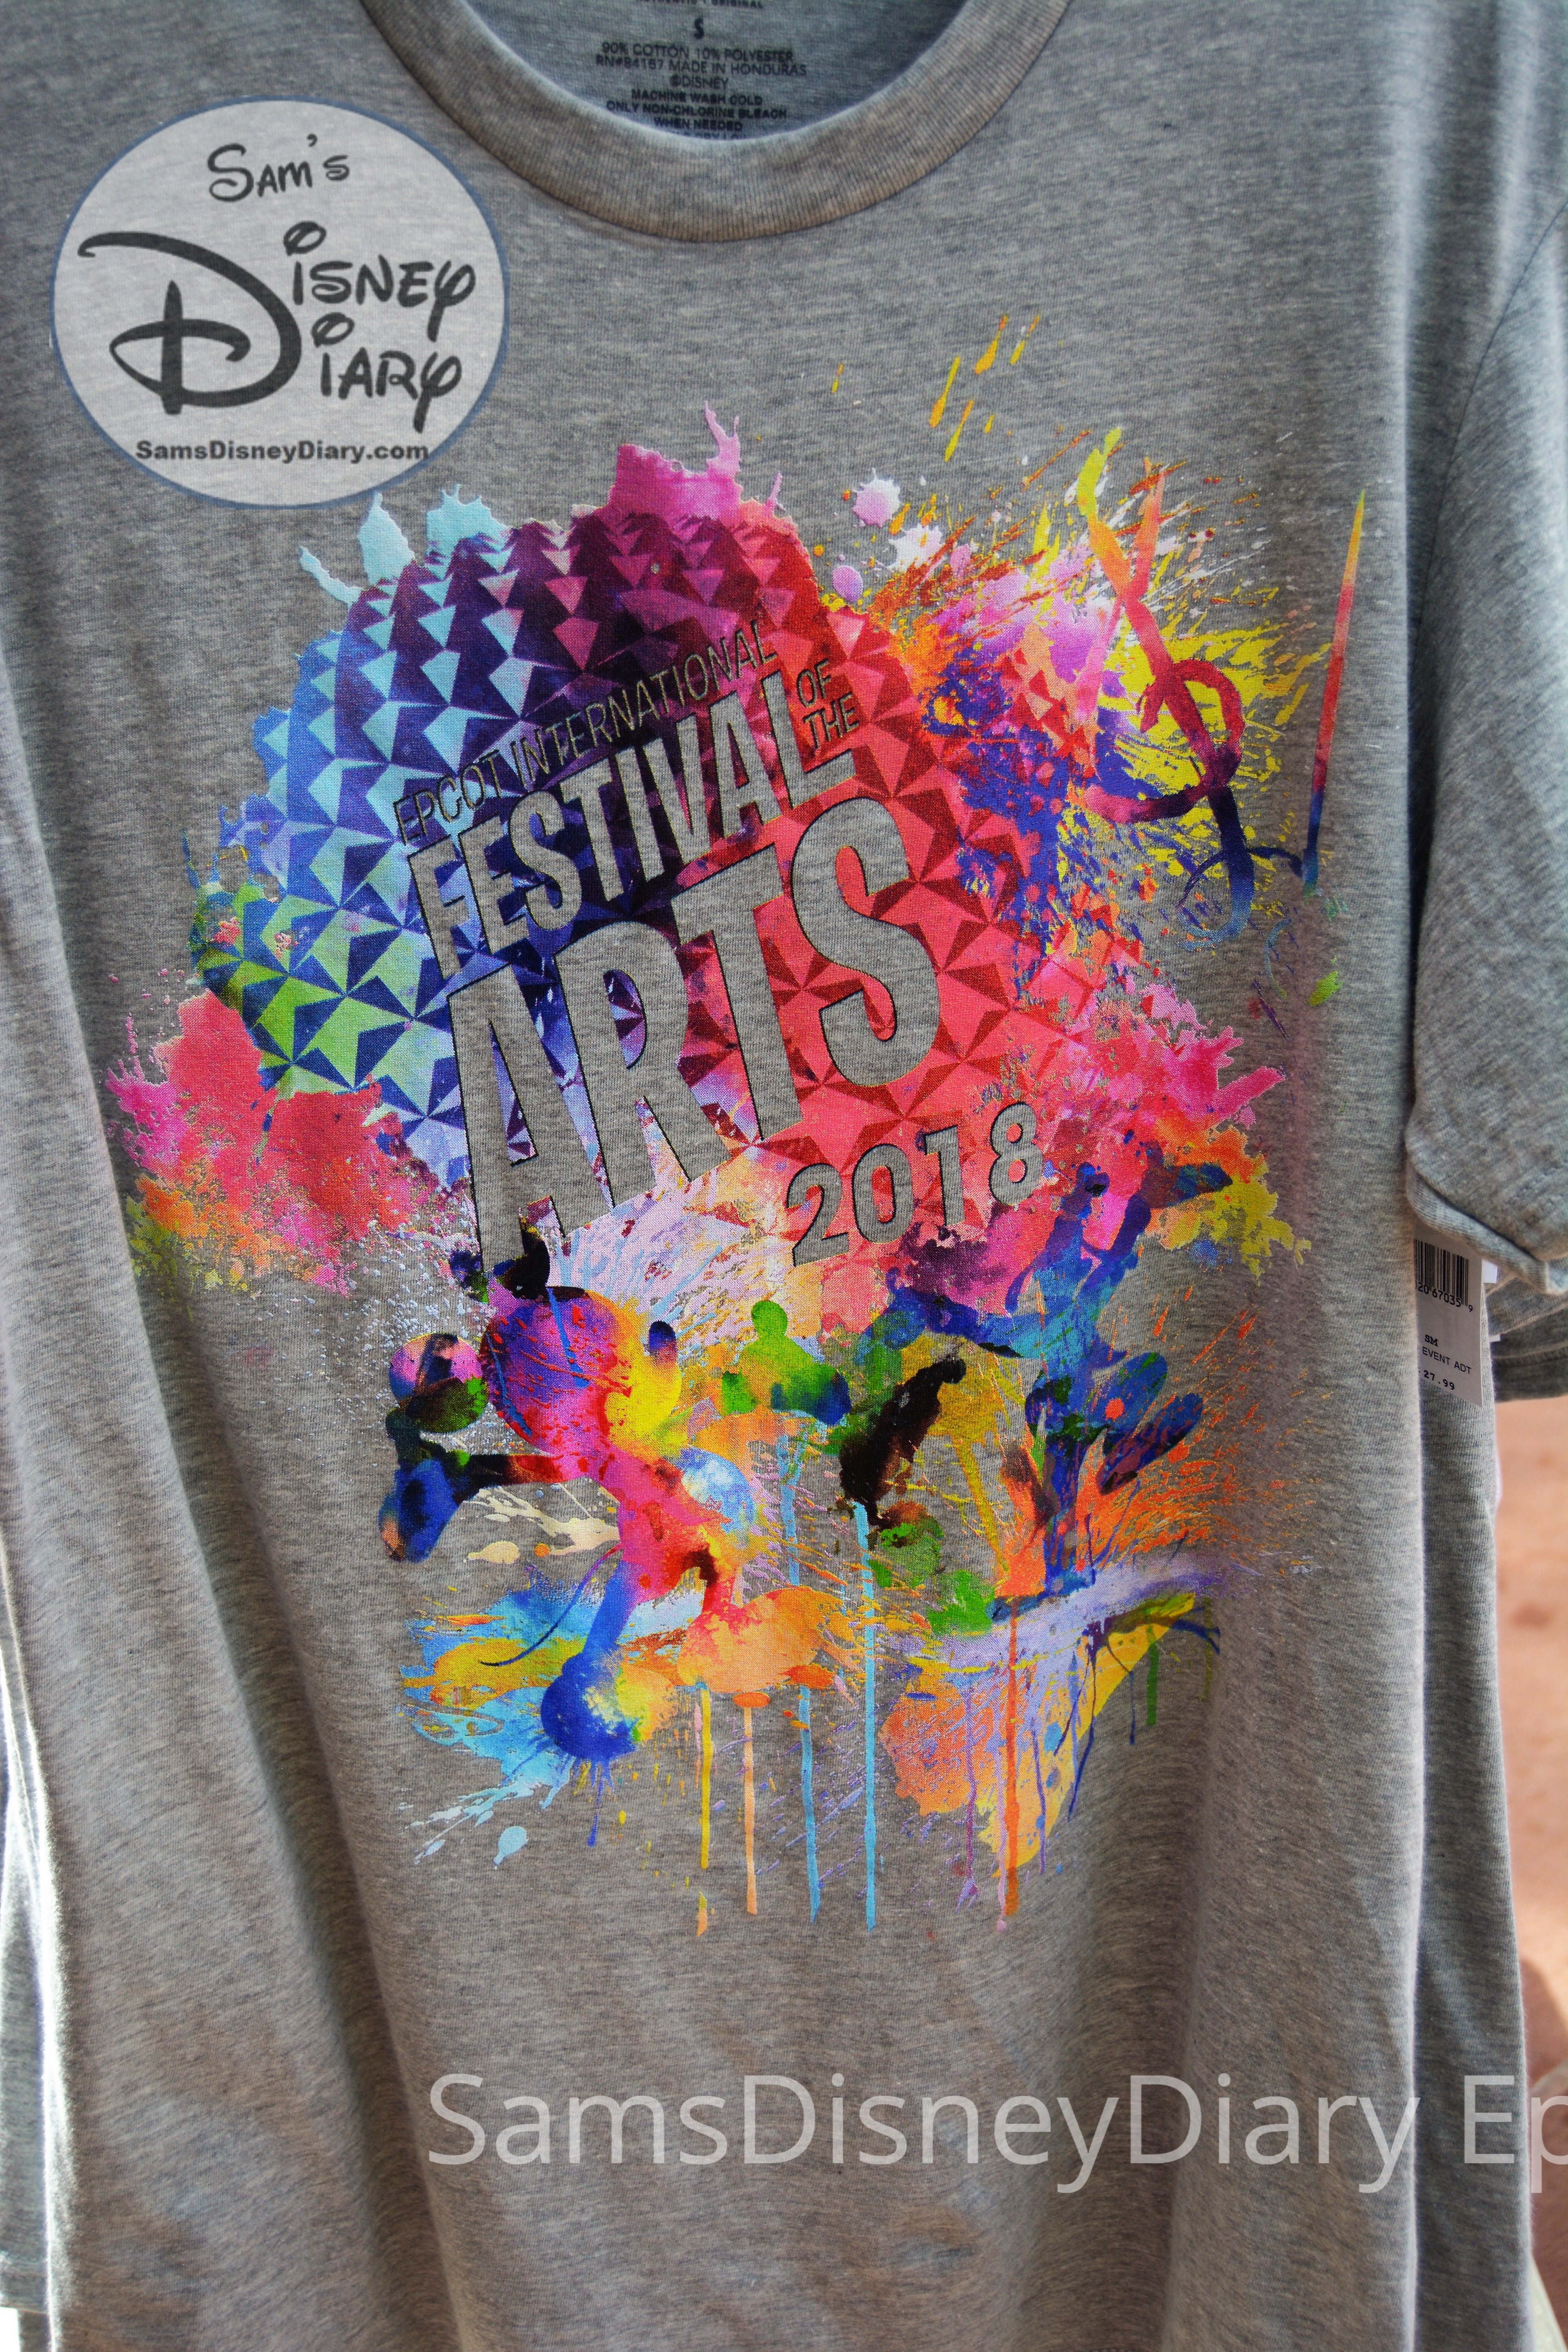 SamsDisneyDiary 105 - Epcot Festival of Arts 2018 T-Shirt